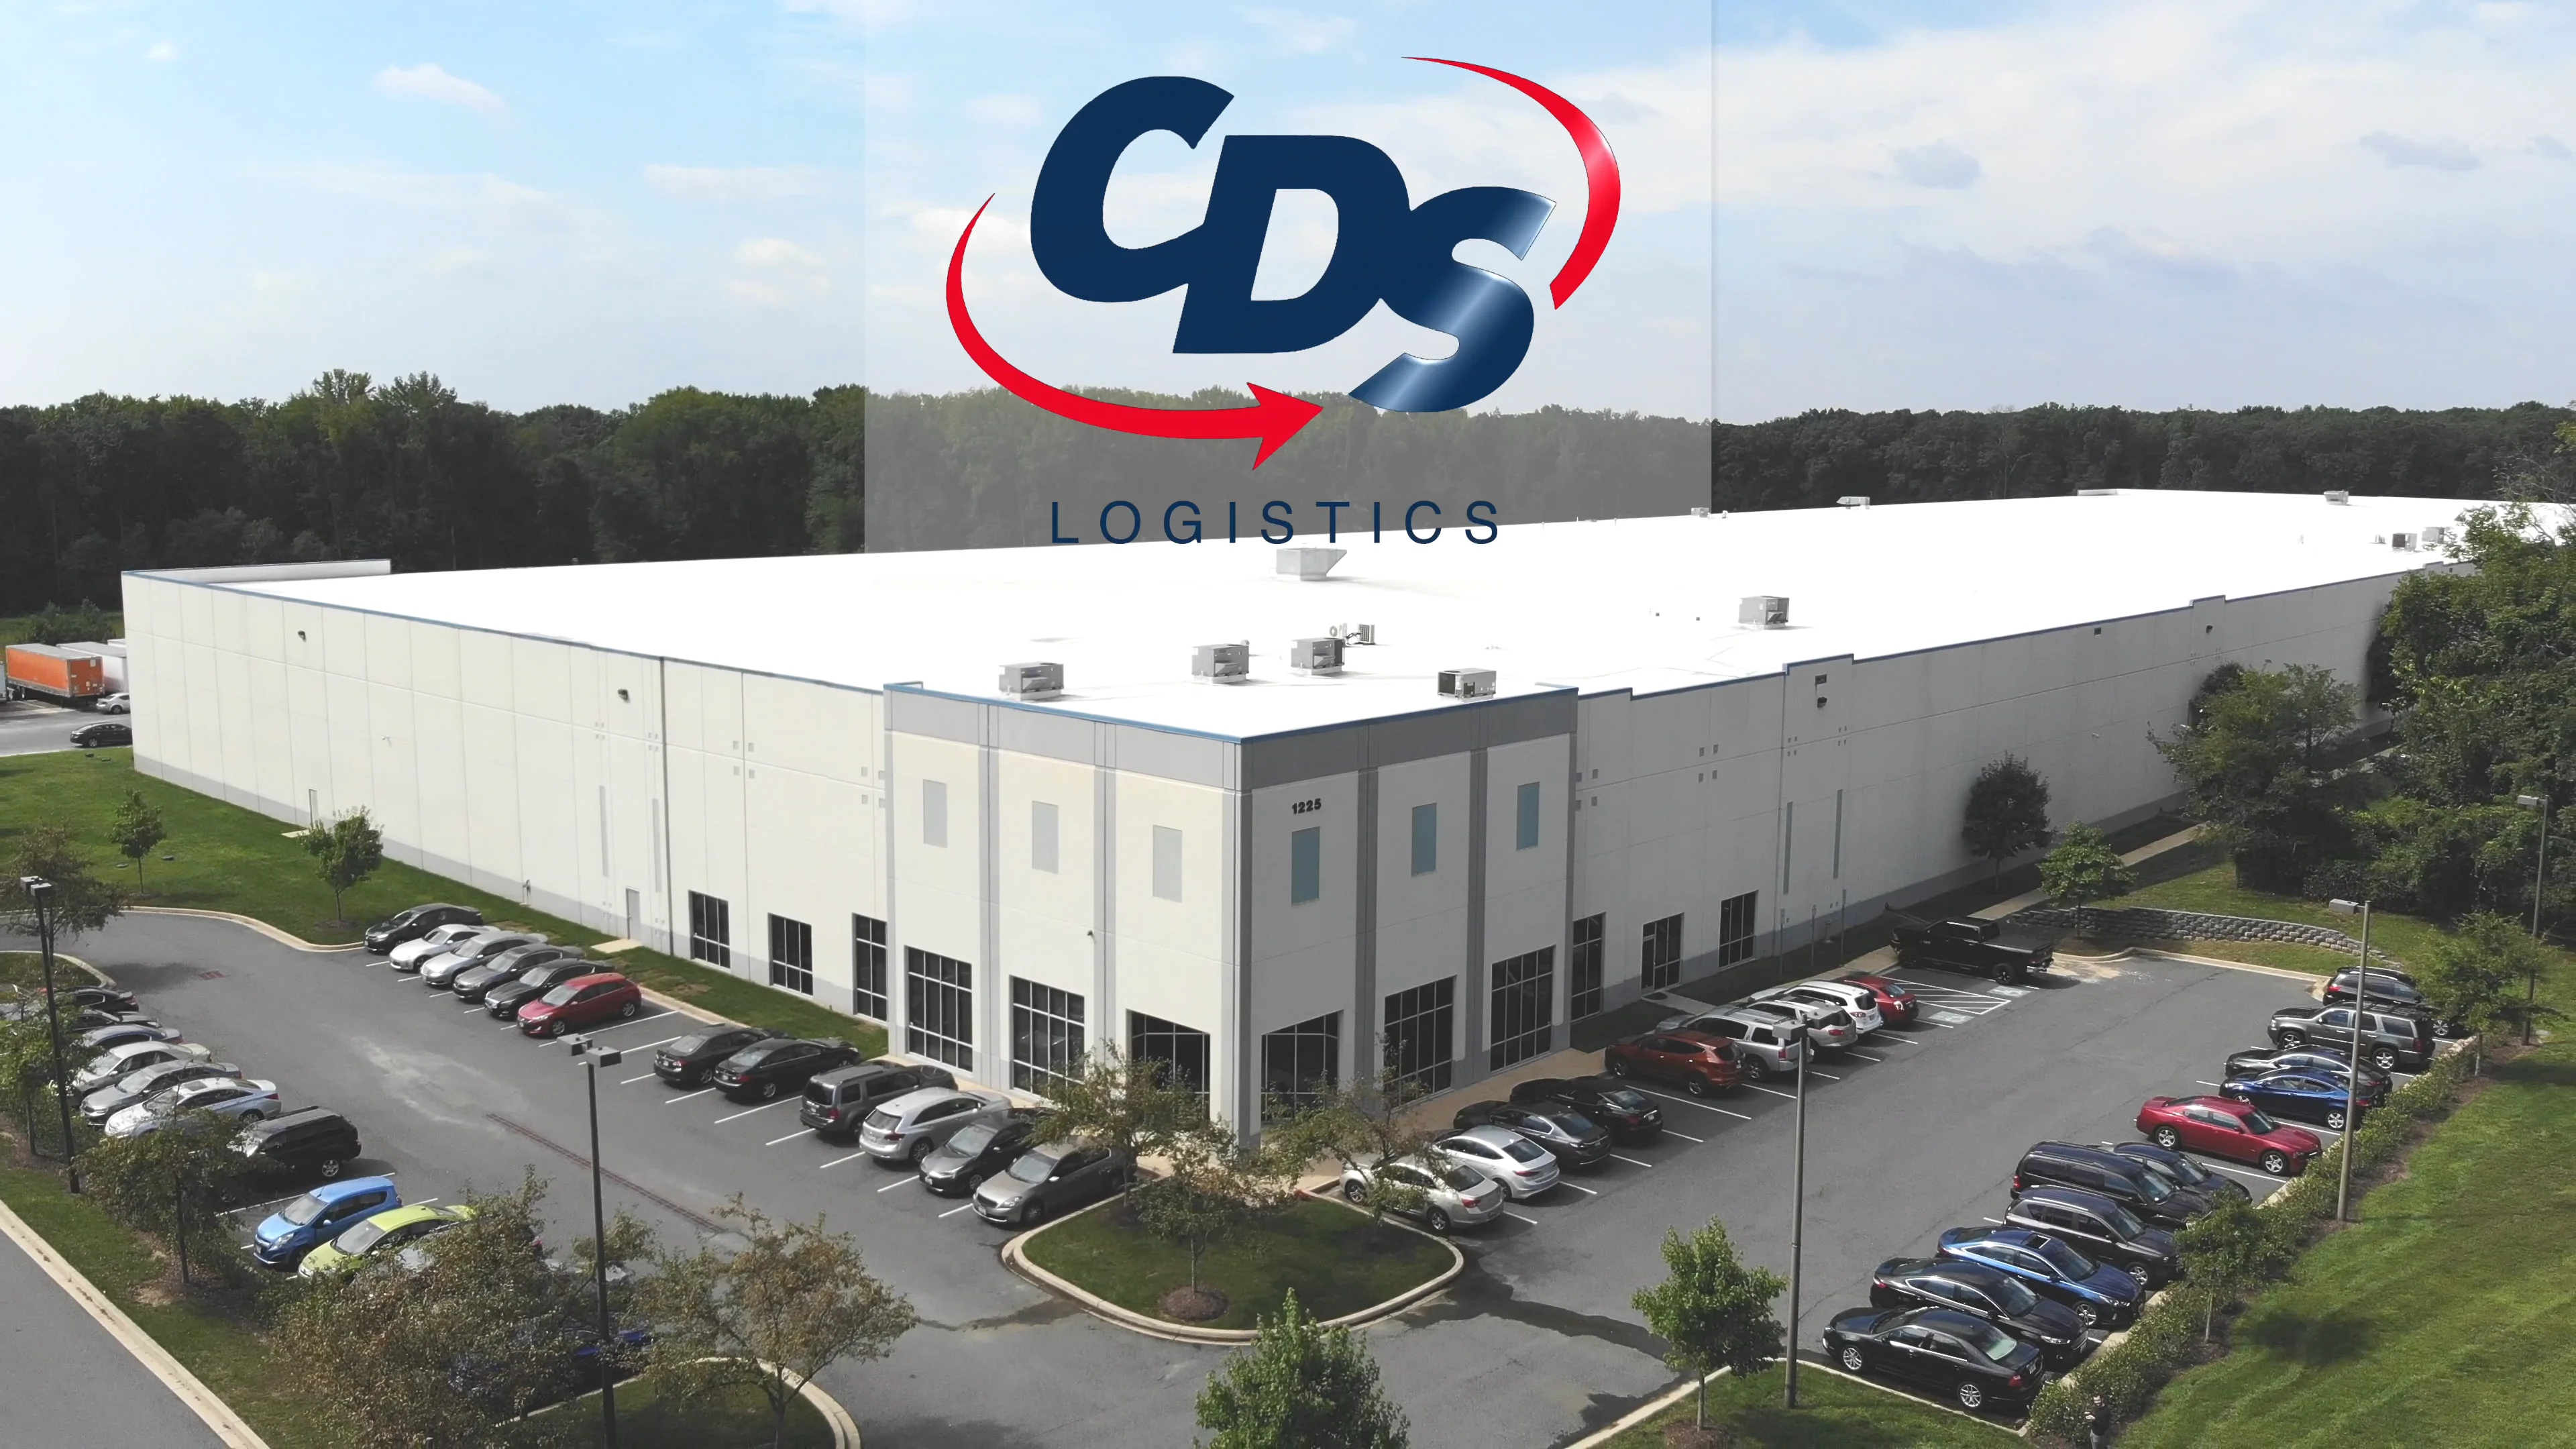 CDS Logistics Management Inc.